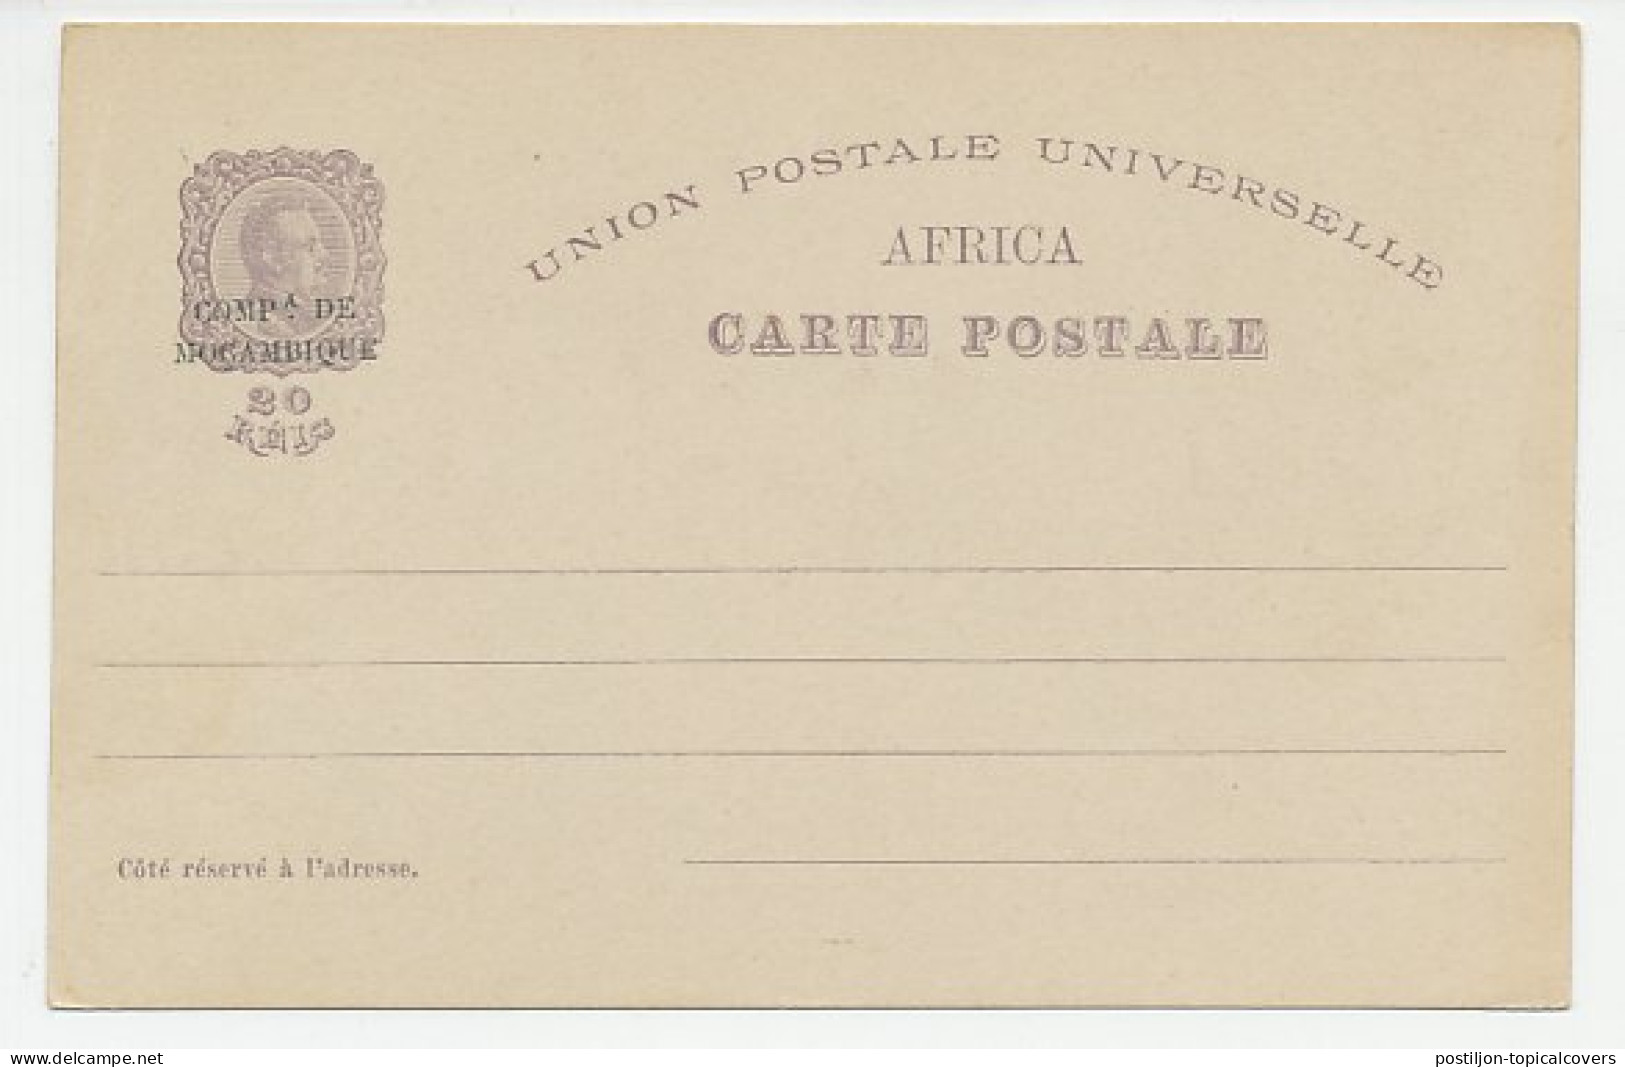 Postal Stationery Mozambique 1898 Centenary From India - Castello Da Pena - Castles